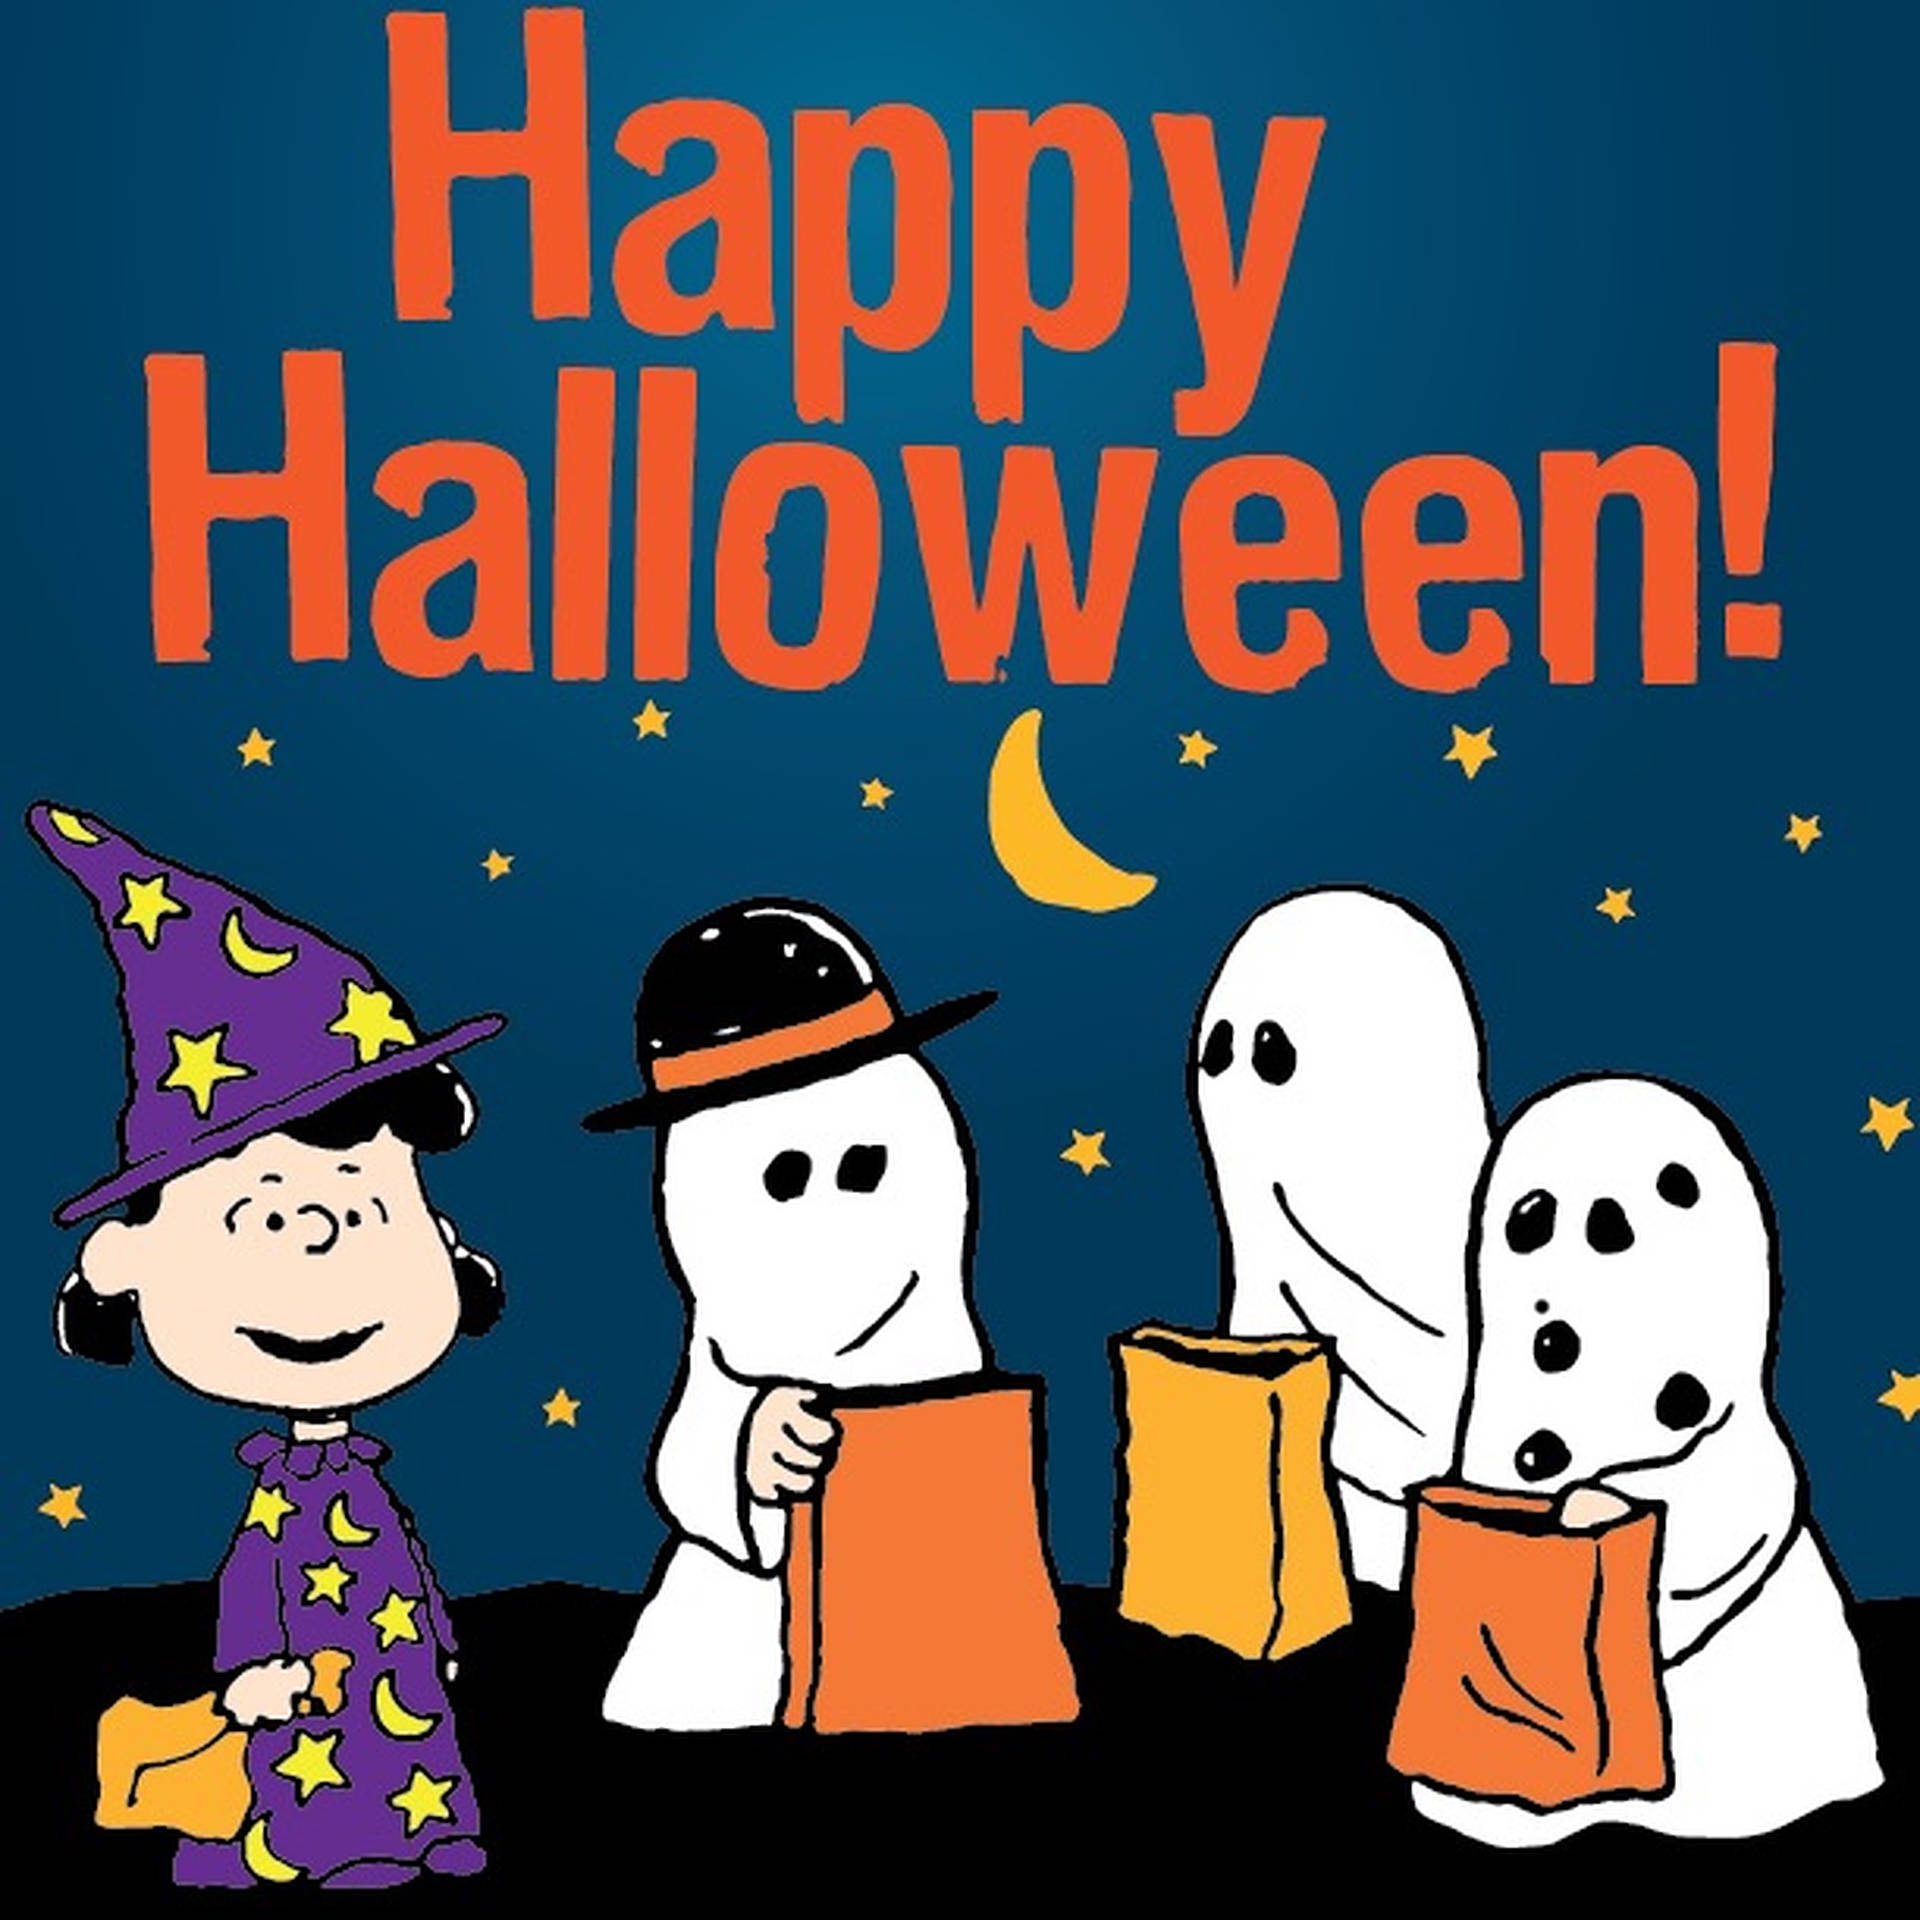 Charlie Brown Halloween Costumes